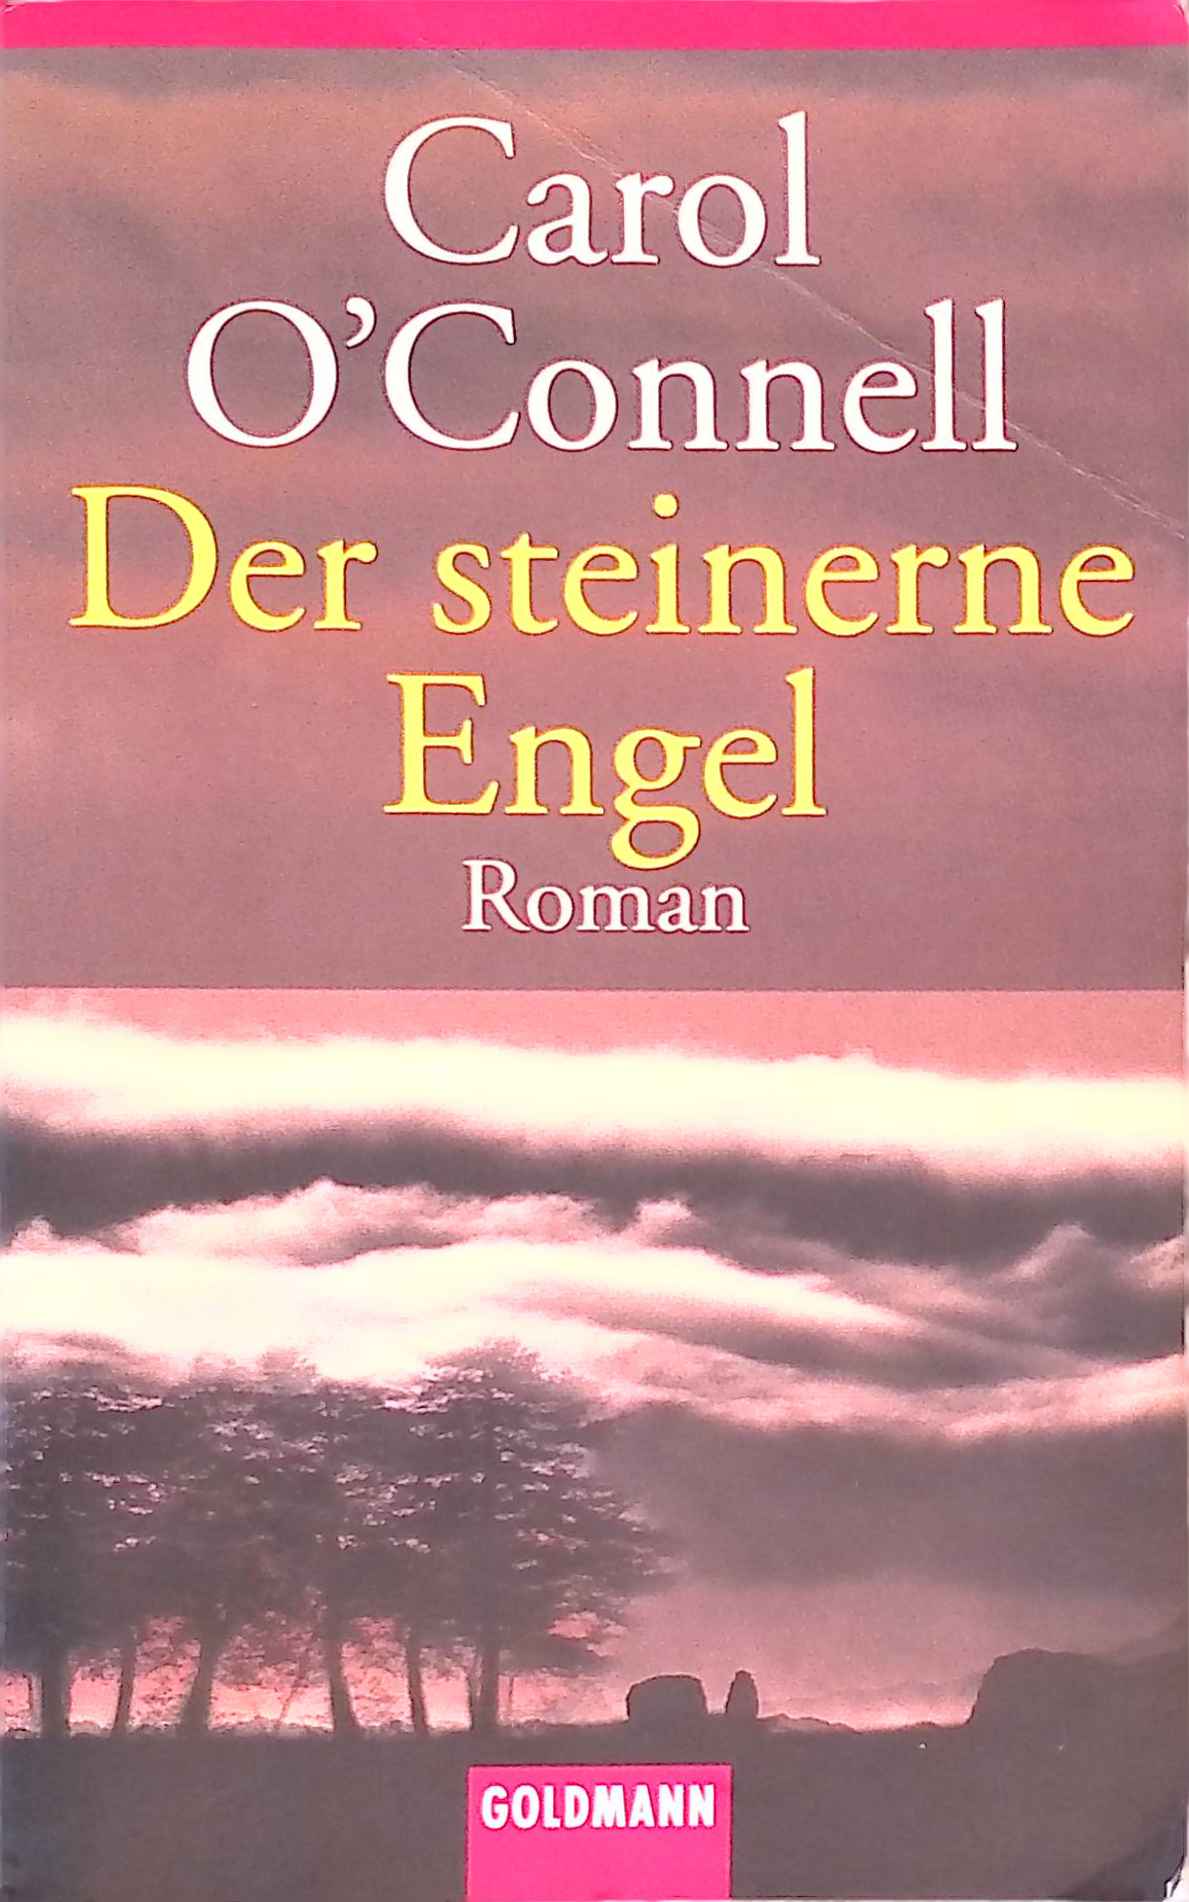 Der steinerne Engel : Roman. Goldmann ; 45282 - O'Connell, Carol